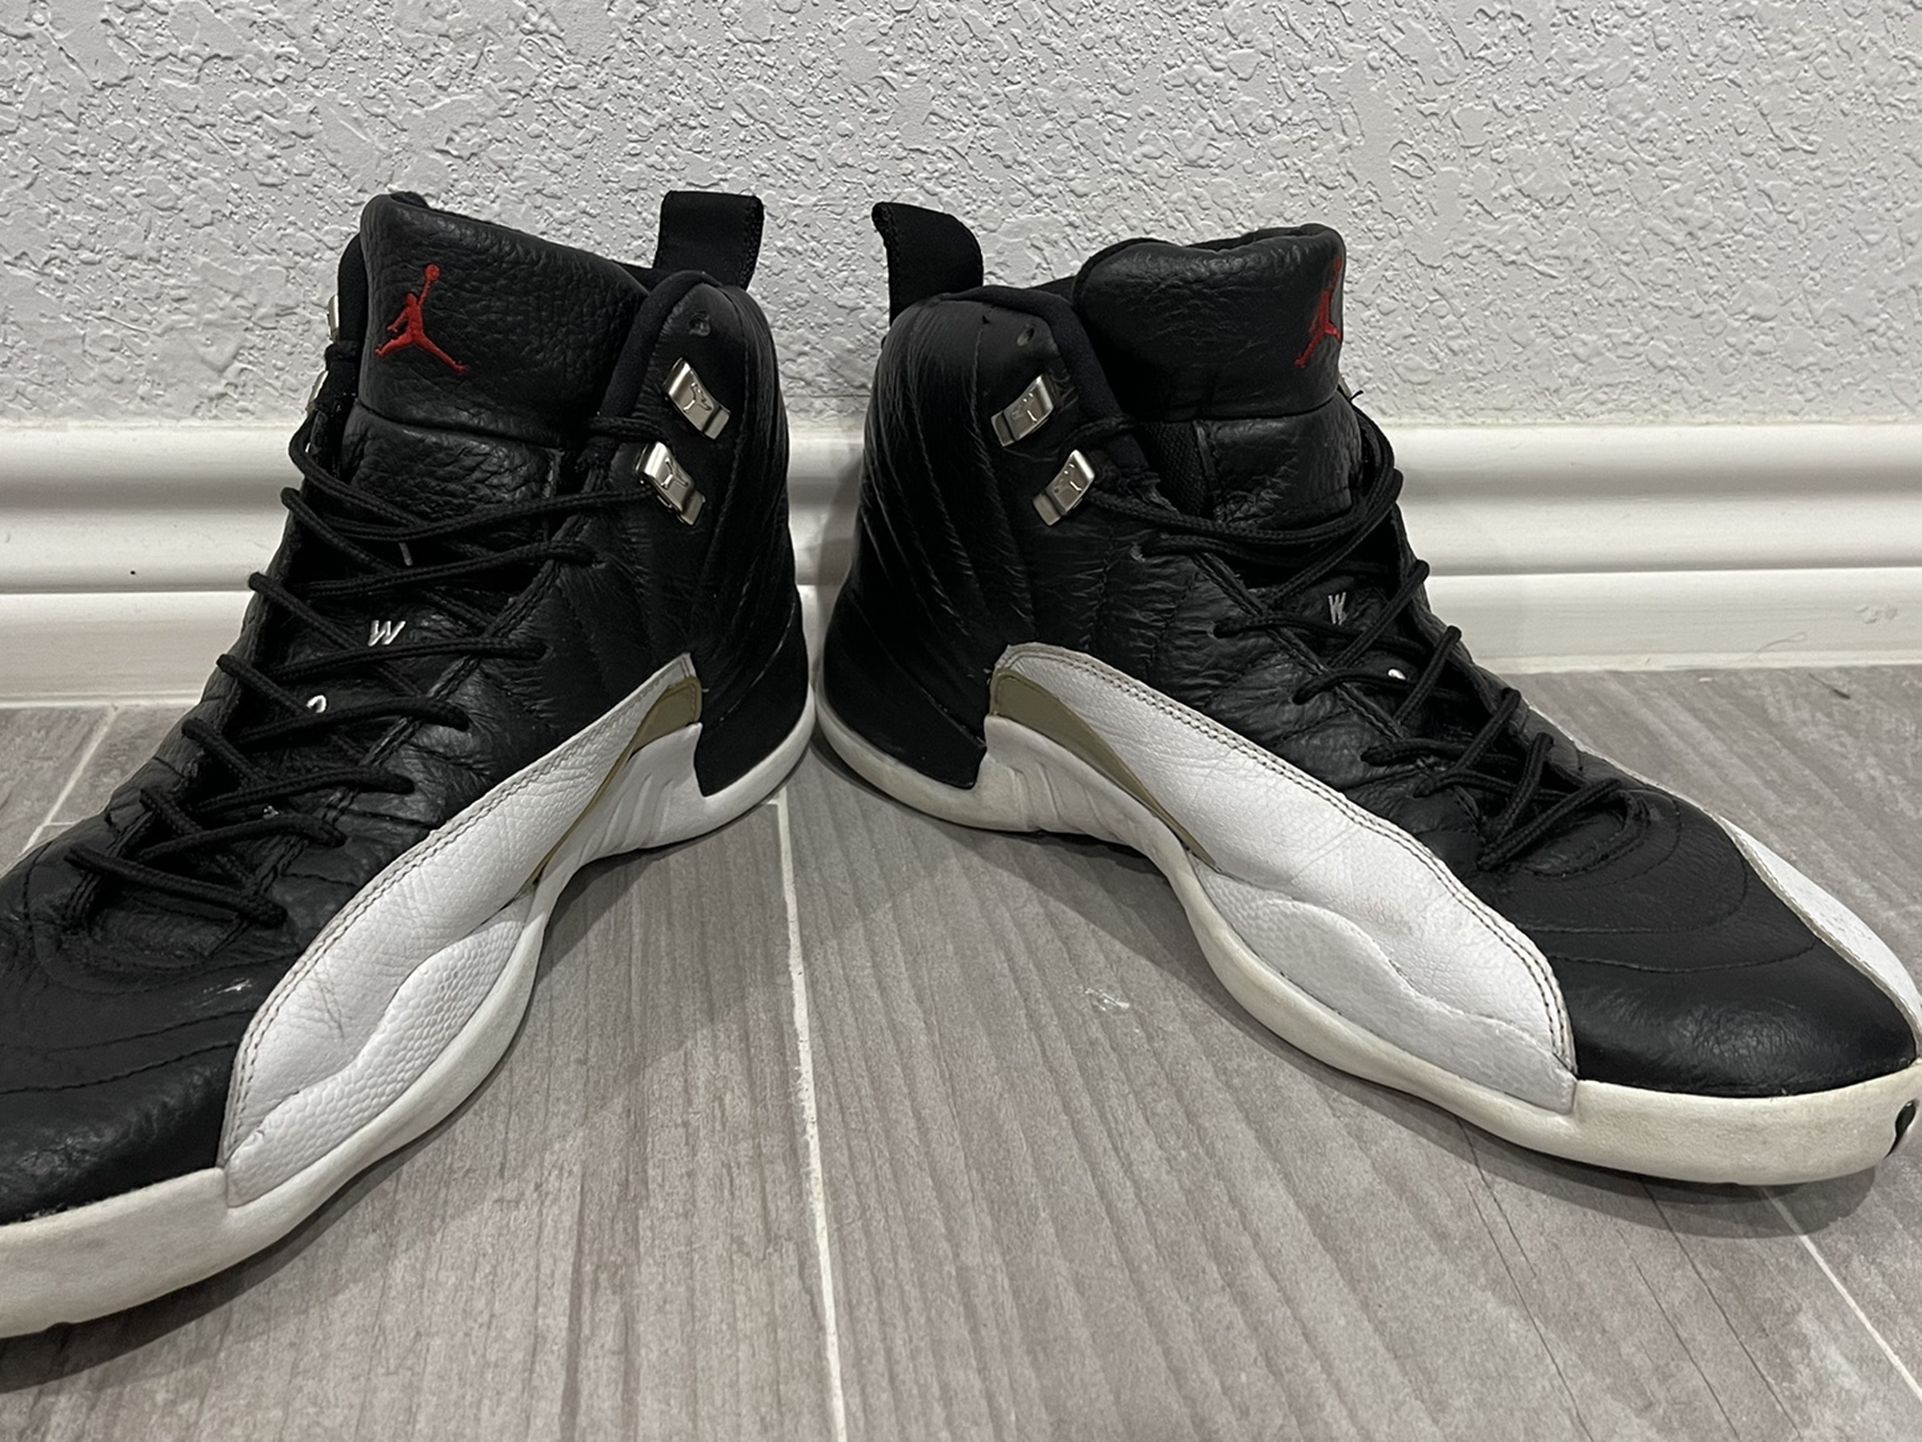 Jordan 12 Black And White